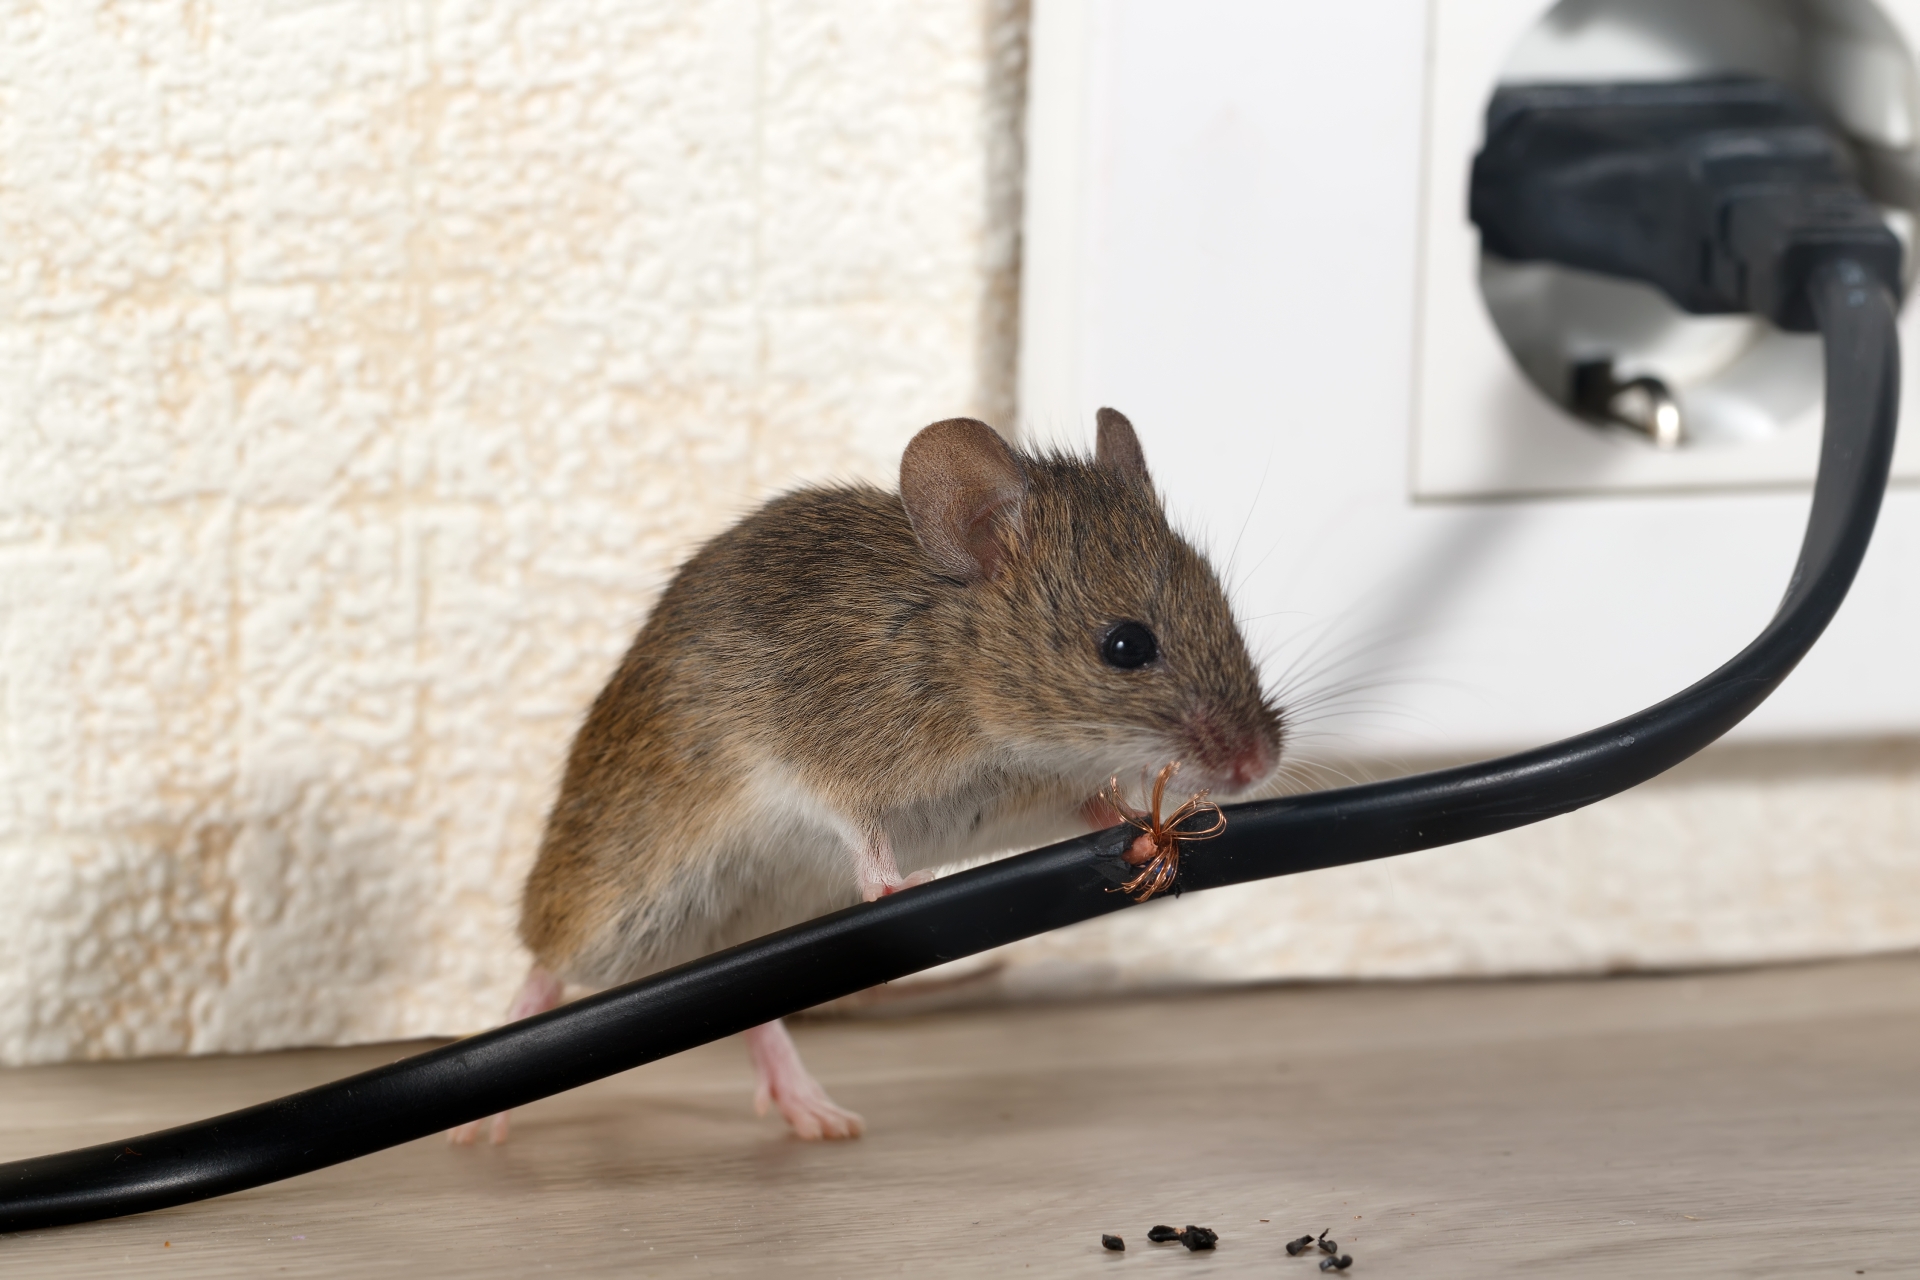 Mice Infestation, Pest Control in Ruislip, South Ruislip, Ruislip Manor, HA4. Call Now 020 8166 9746